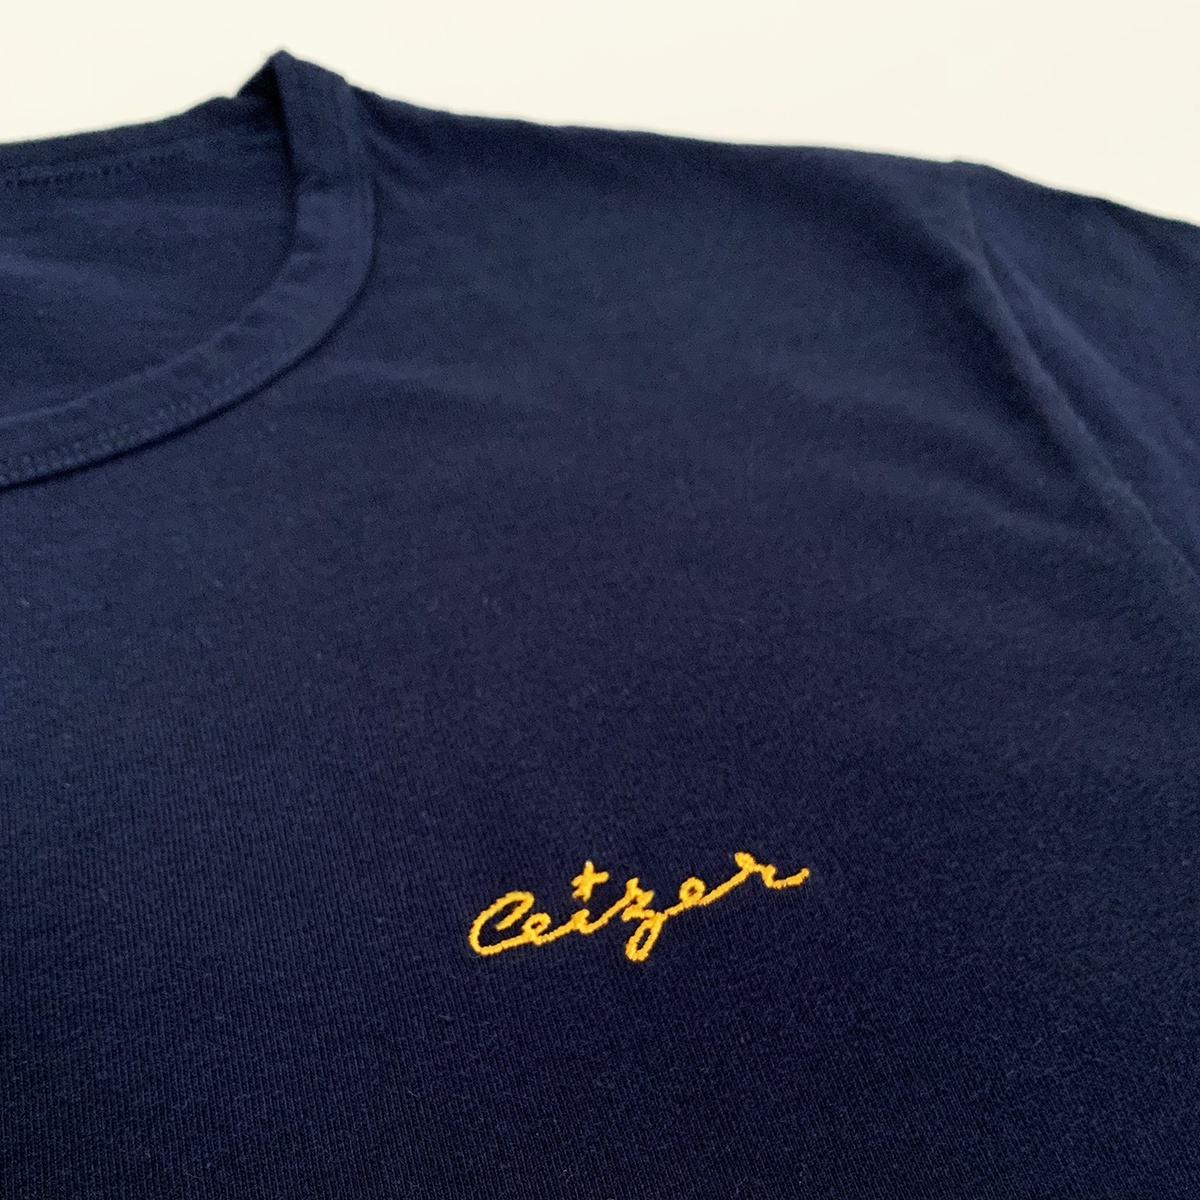 Ceizer Studio 365 Days A Year Longsleeve T-Shirt (Navy)